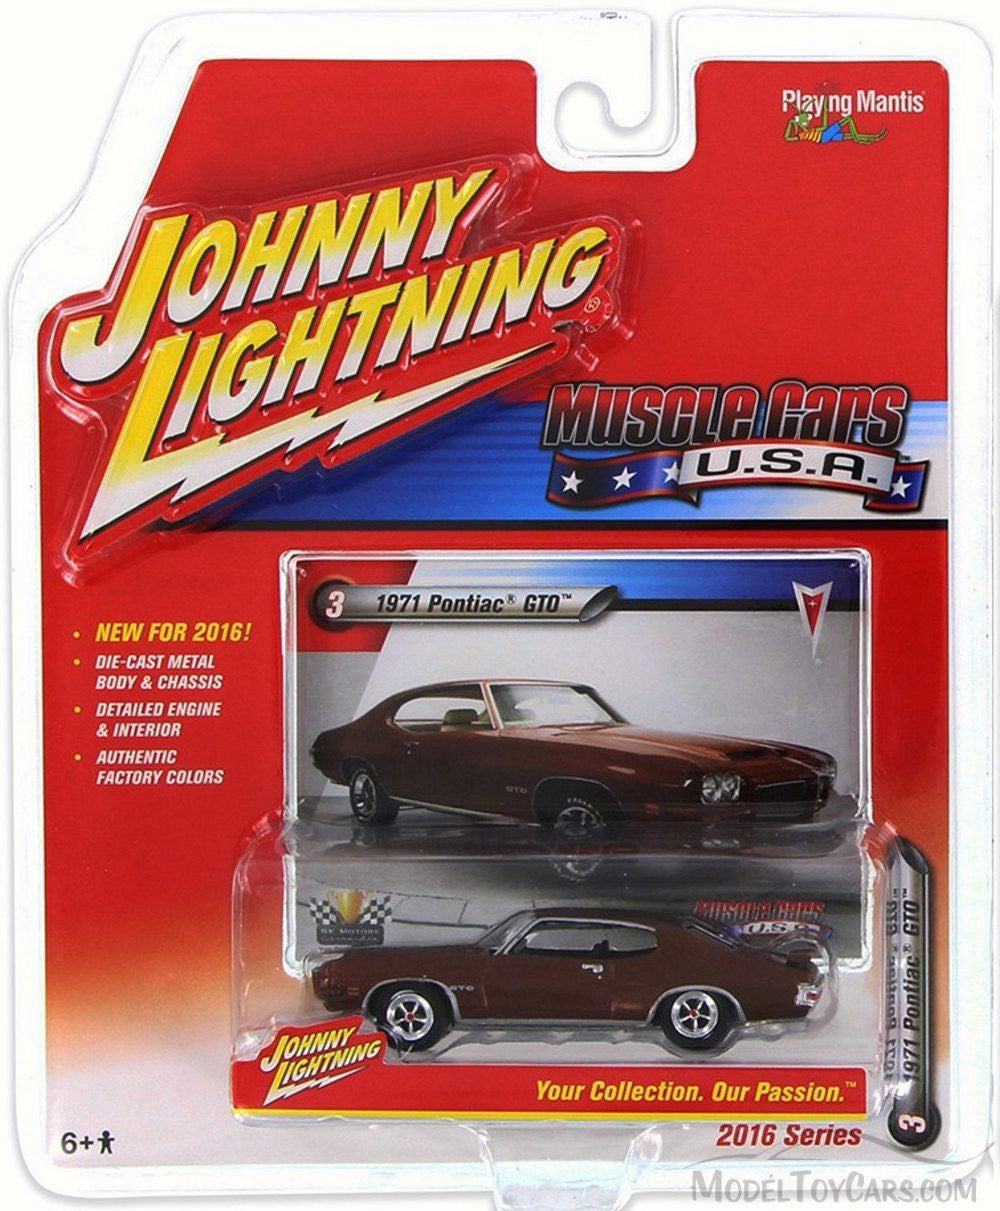 JOHNY LIGHTNING 1/64 DIECAST 1971 PONTIAC GTO